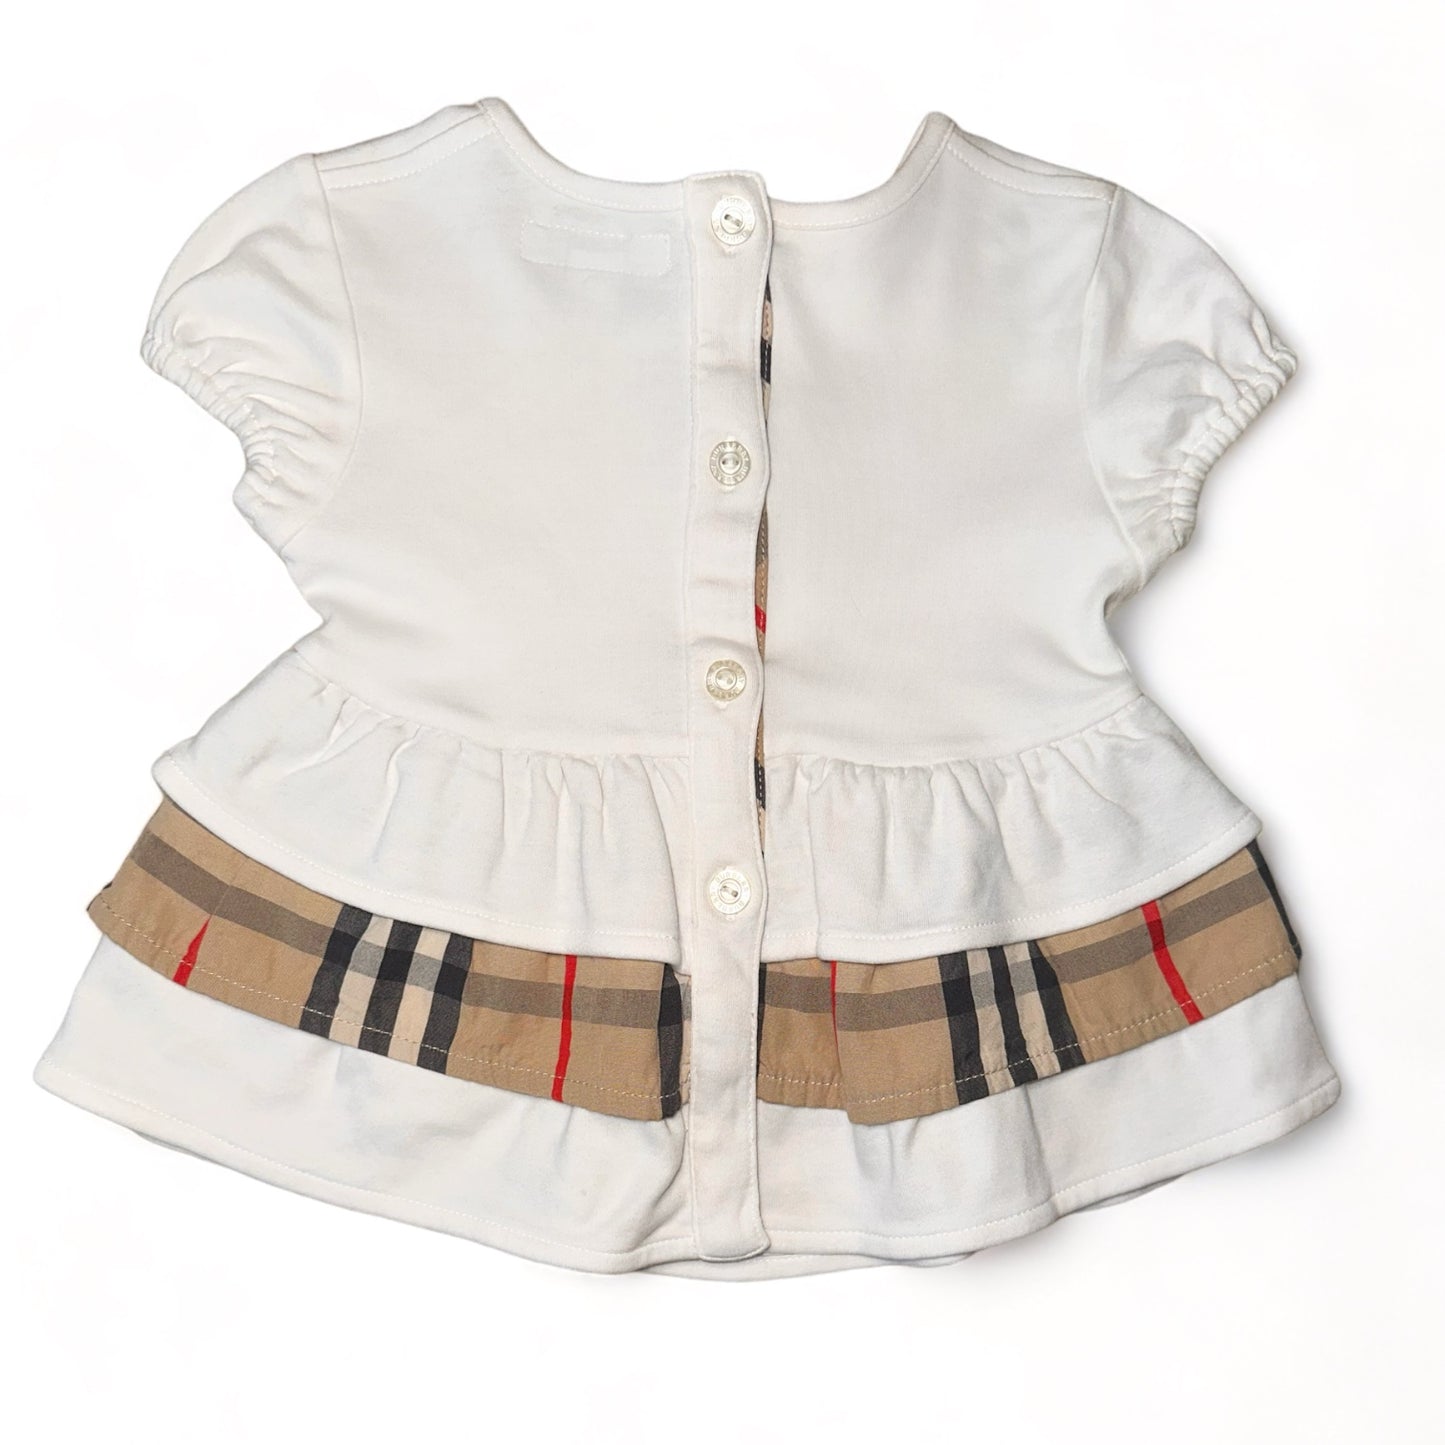 Burberry London Infant Ruffle Dress